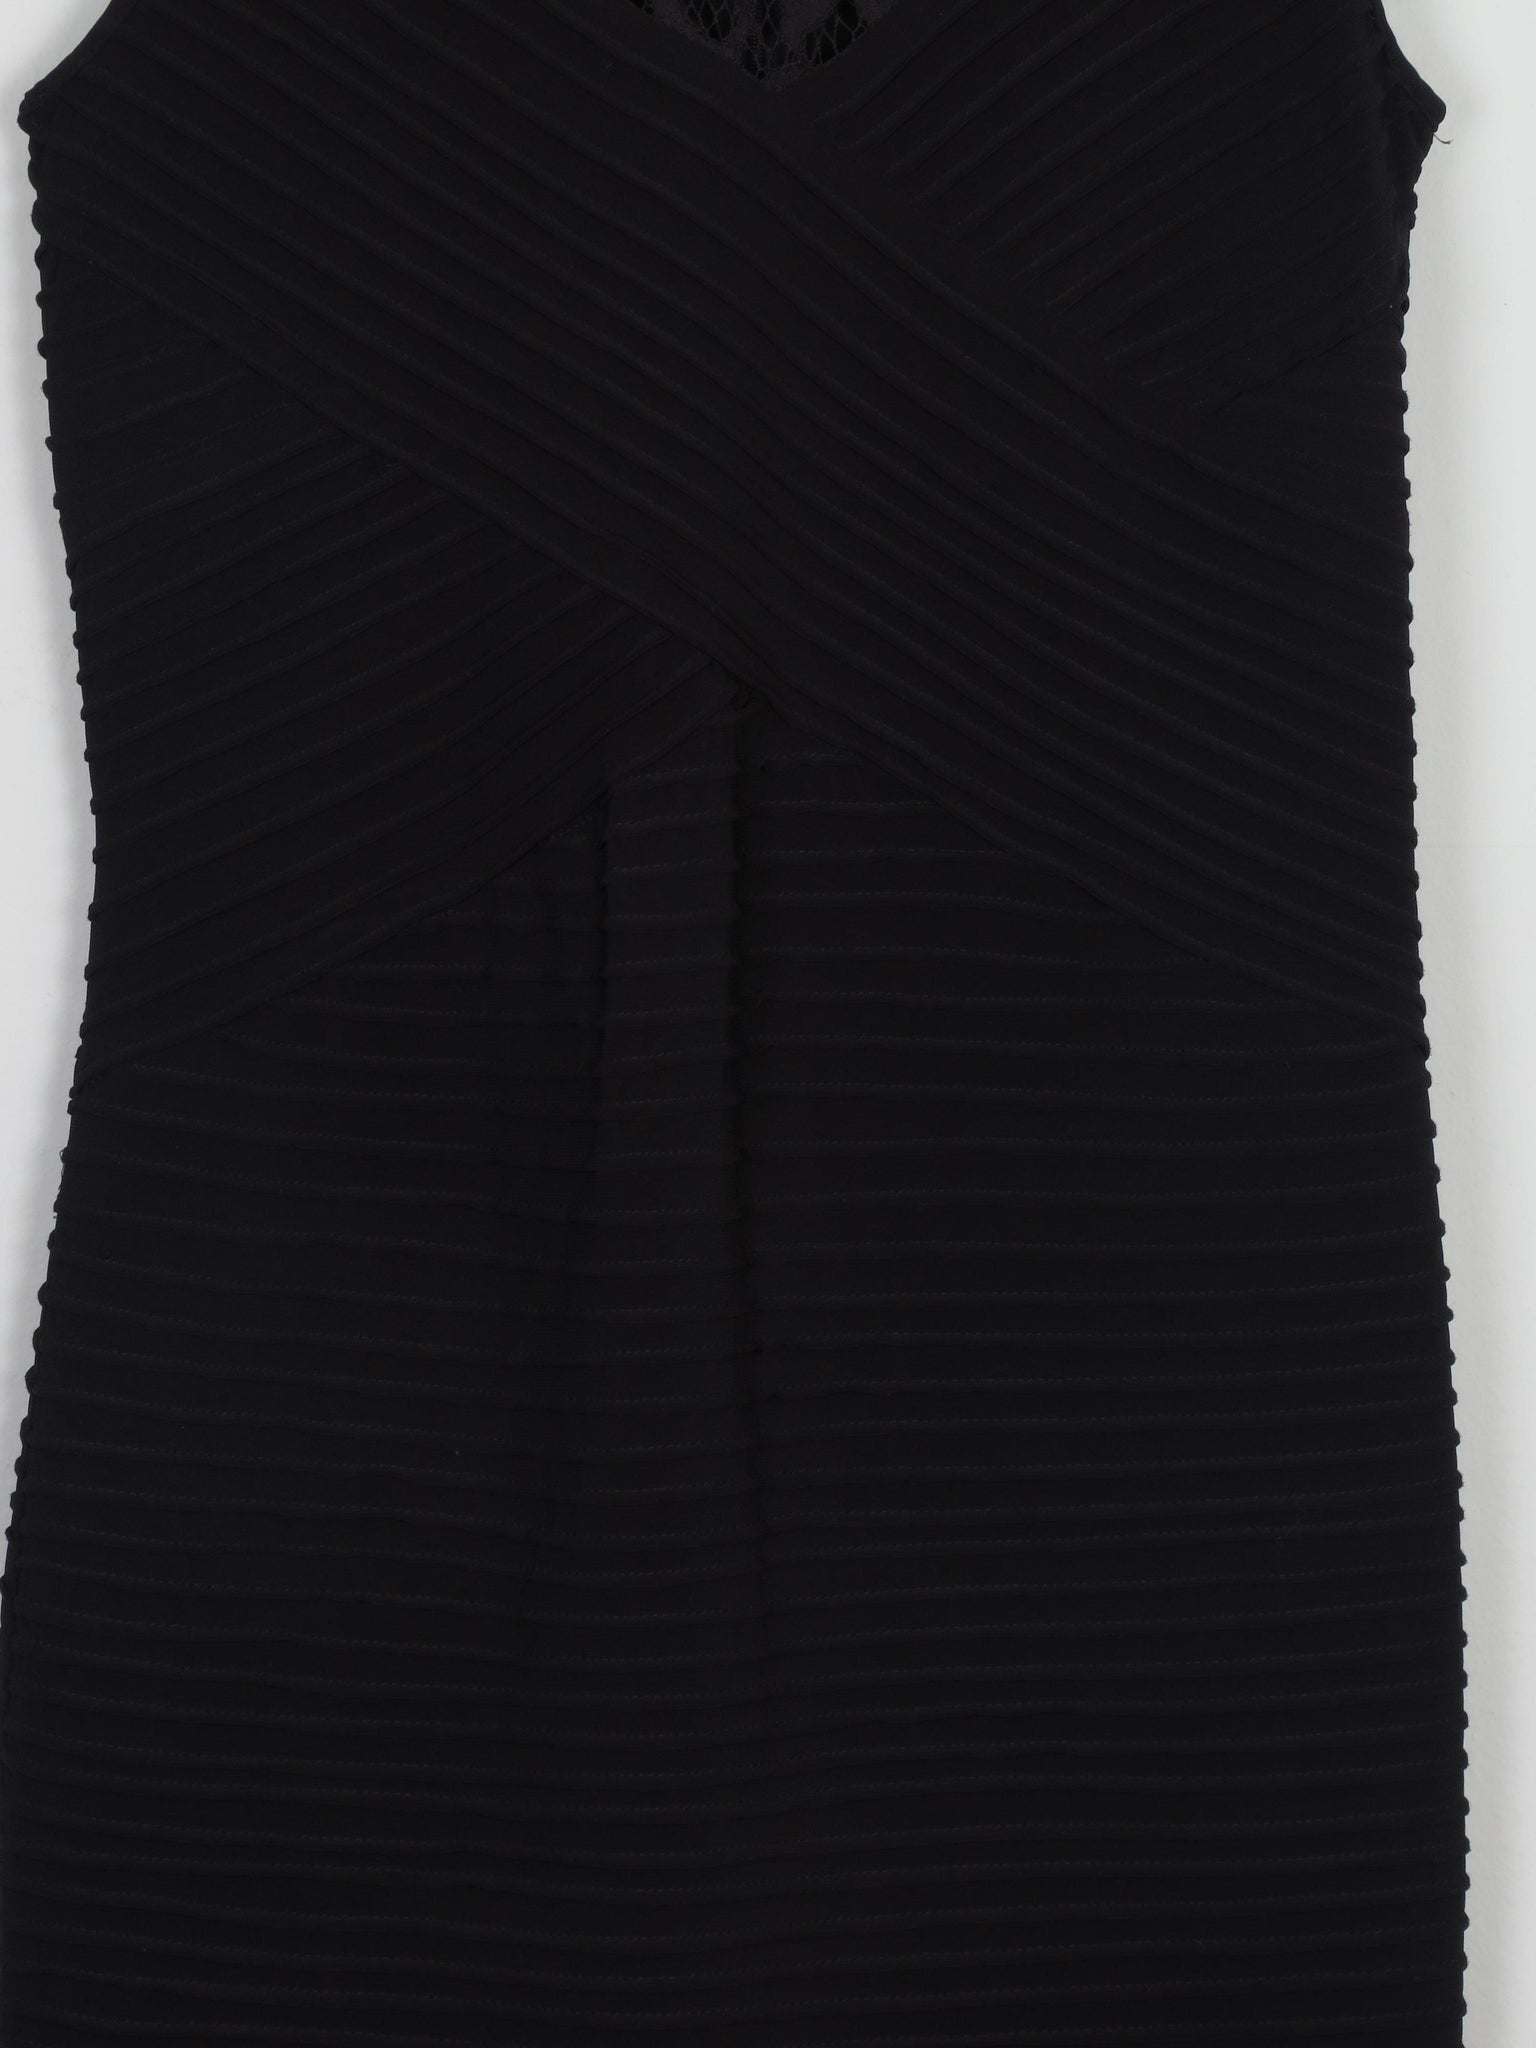 Black Vintage Lace & Bandage Style Dress 12 - The Harlequin